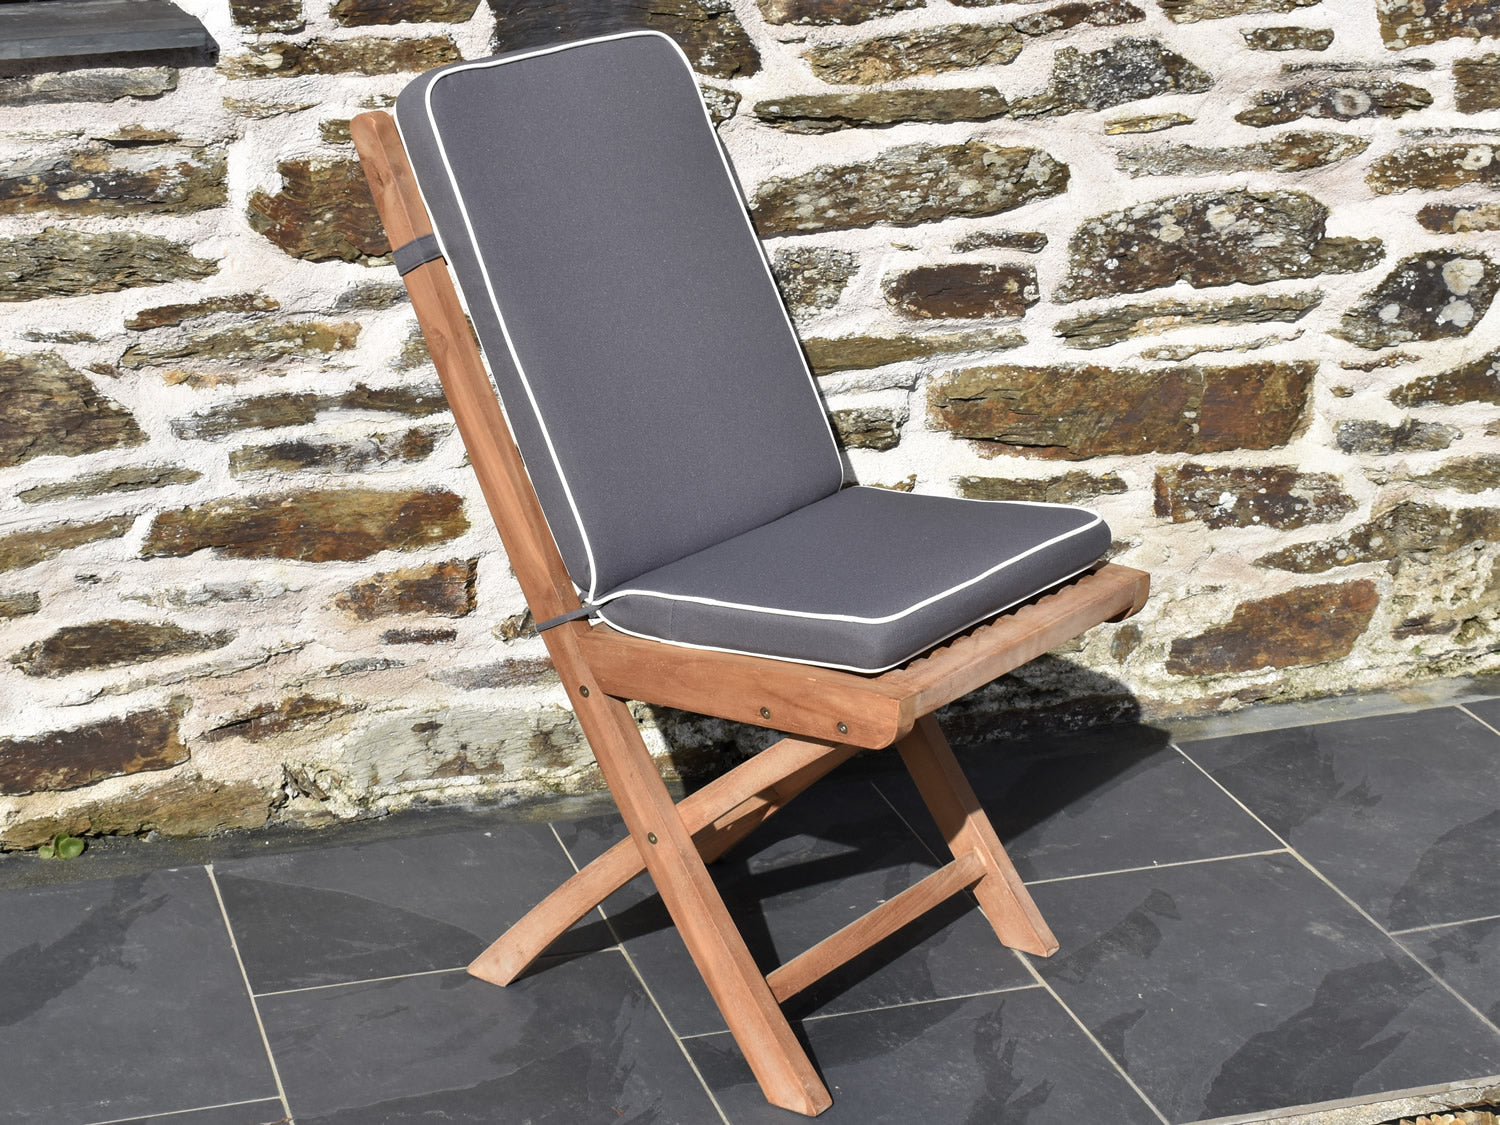 Luxurt grey folding seat pad and back cushion for folding teak garden chairs